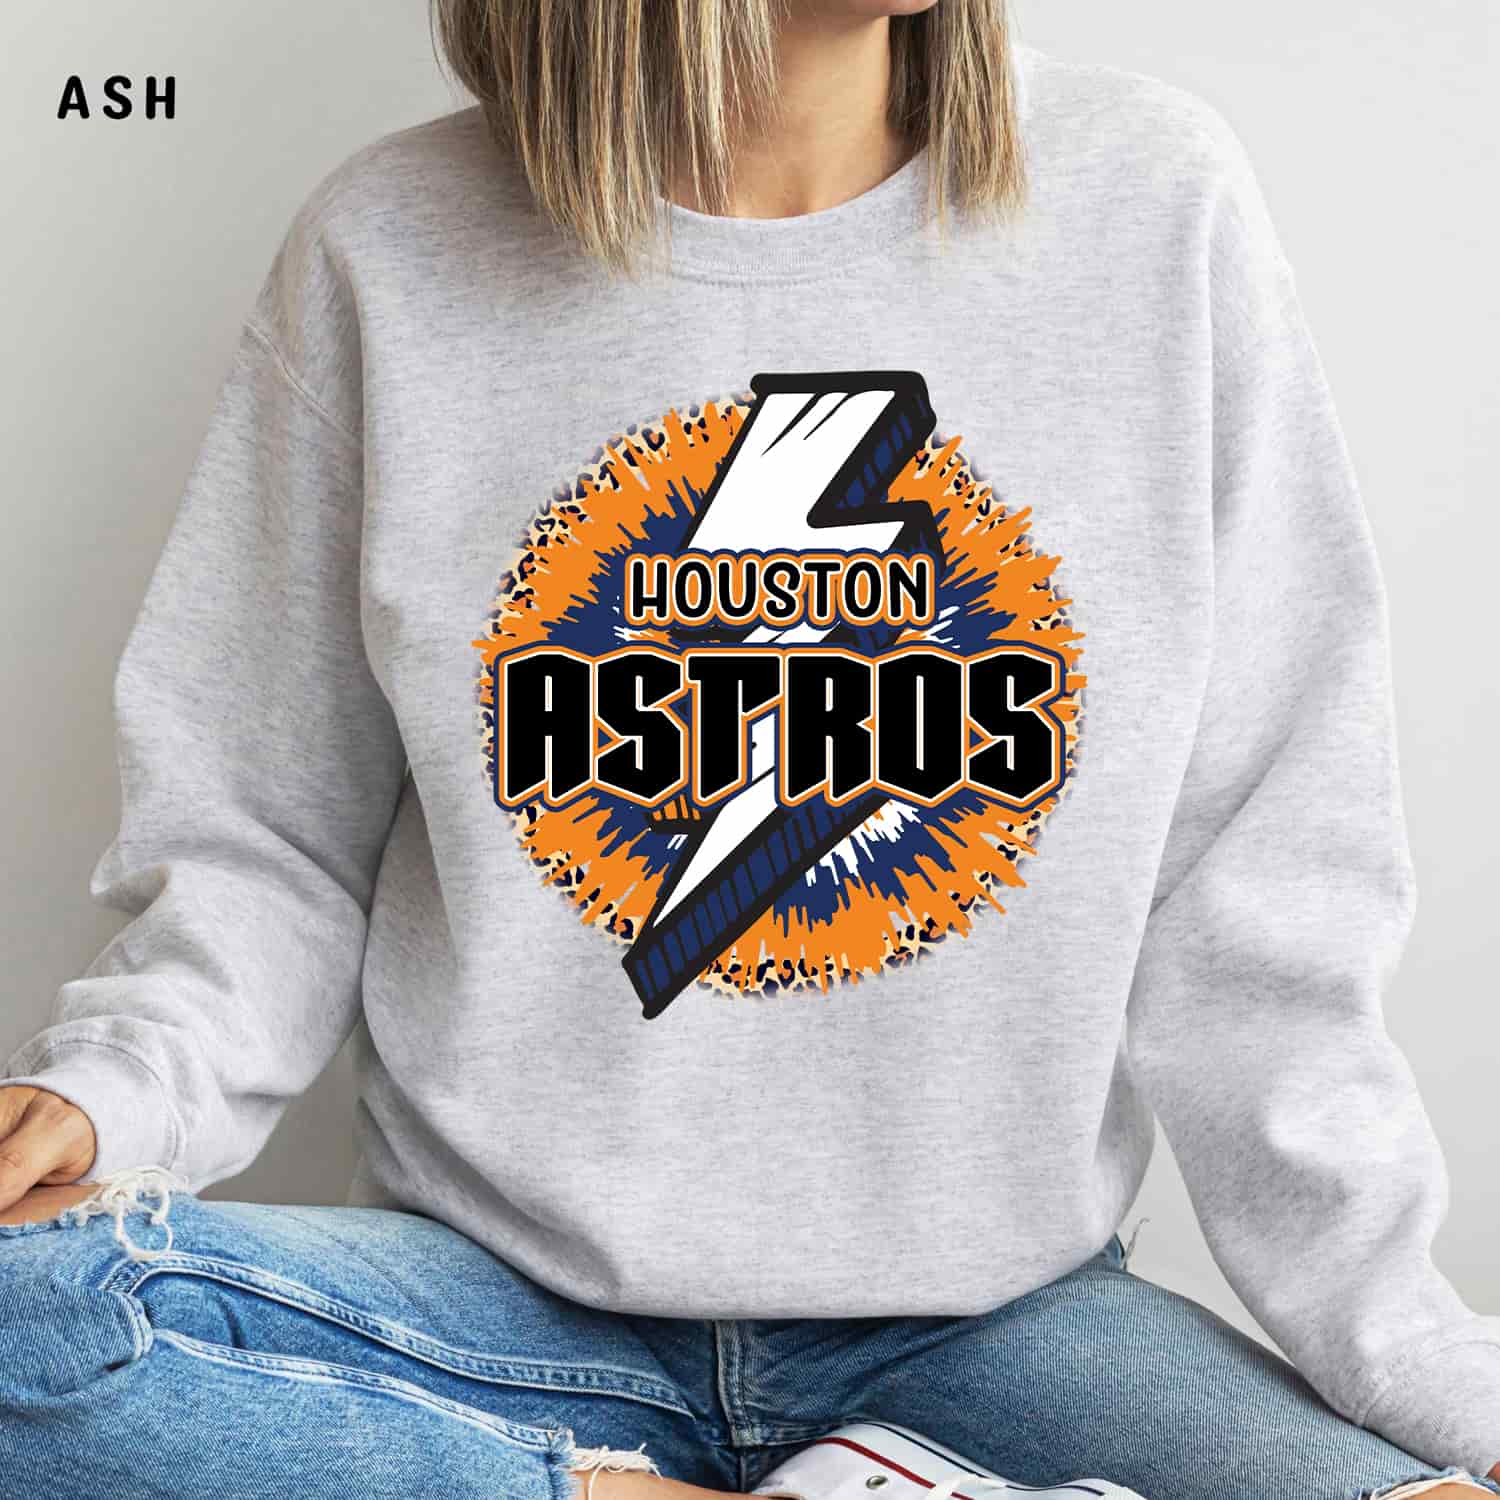 astros ladies shirts